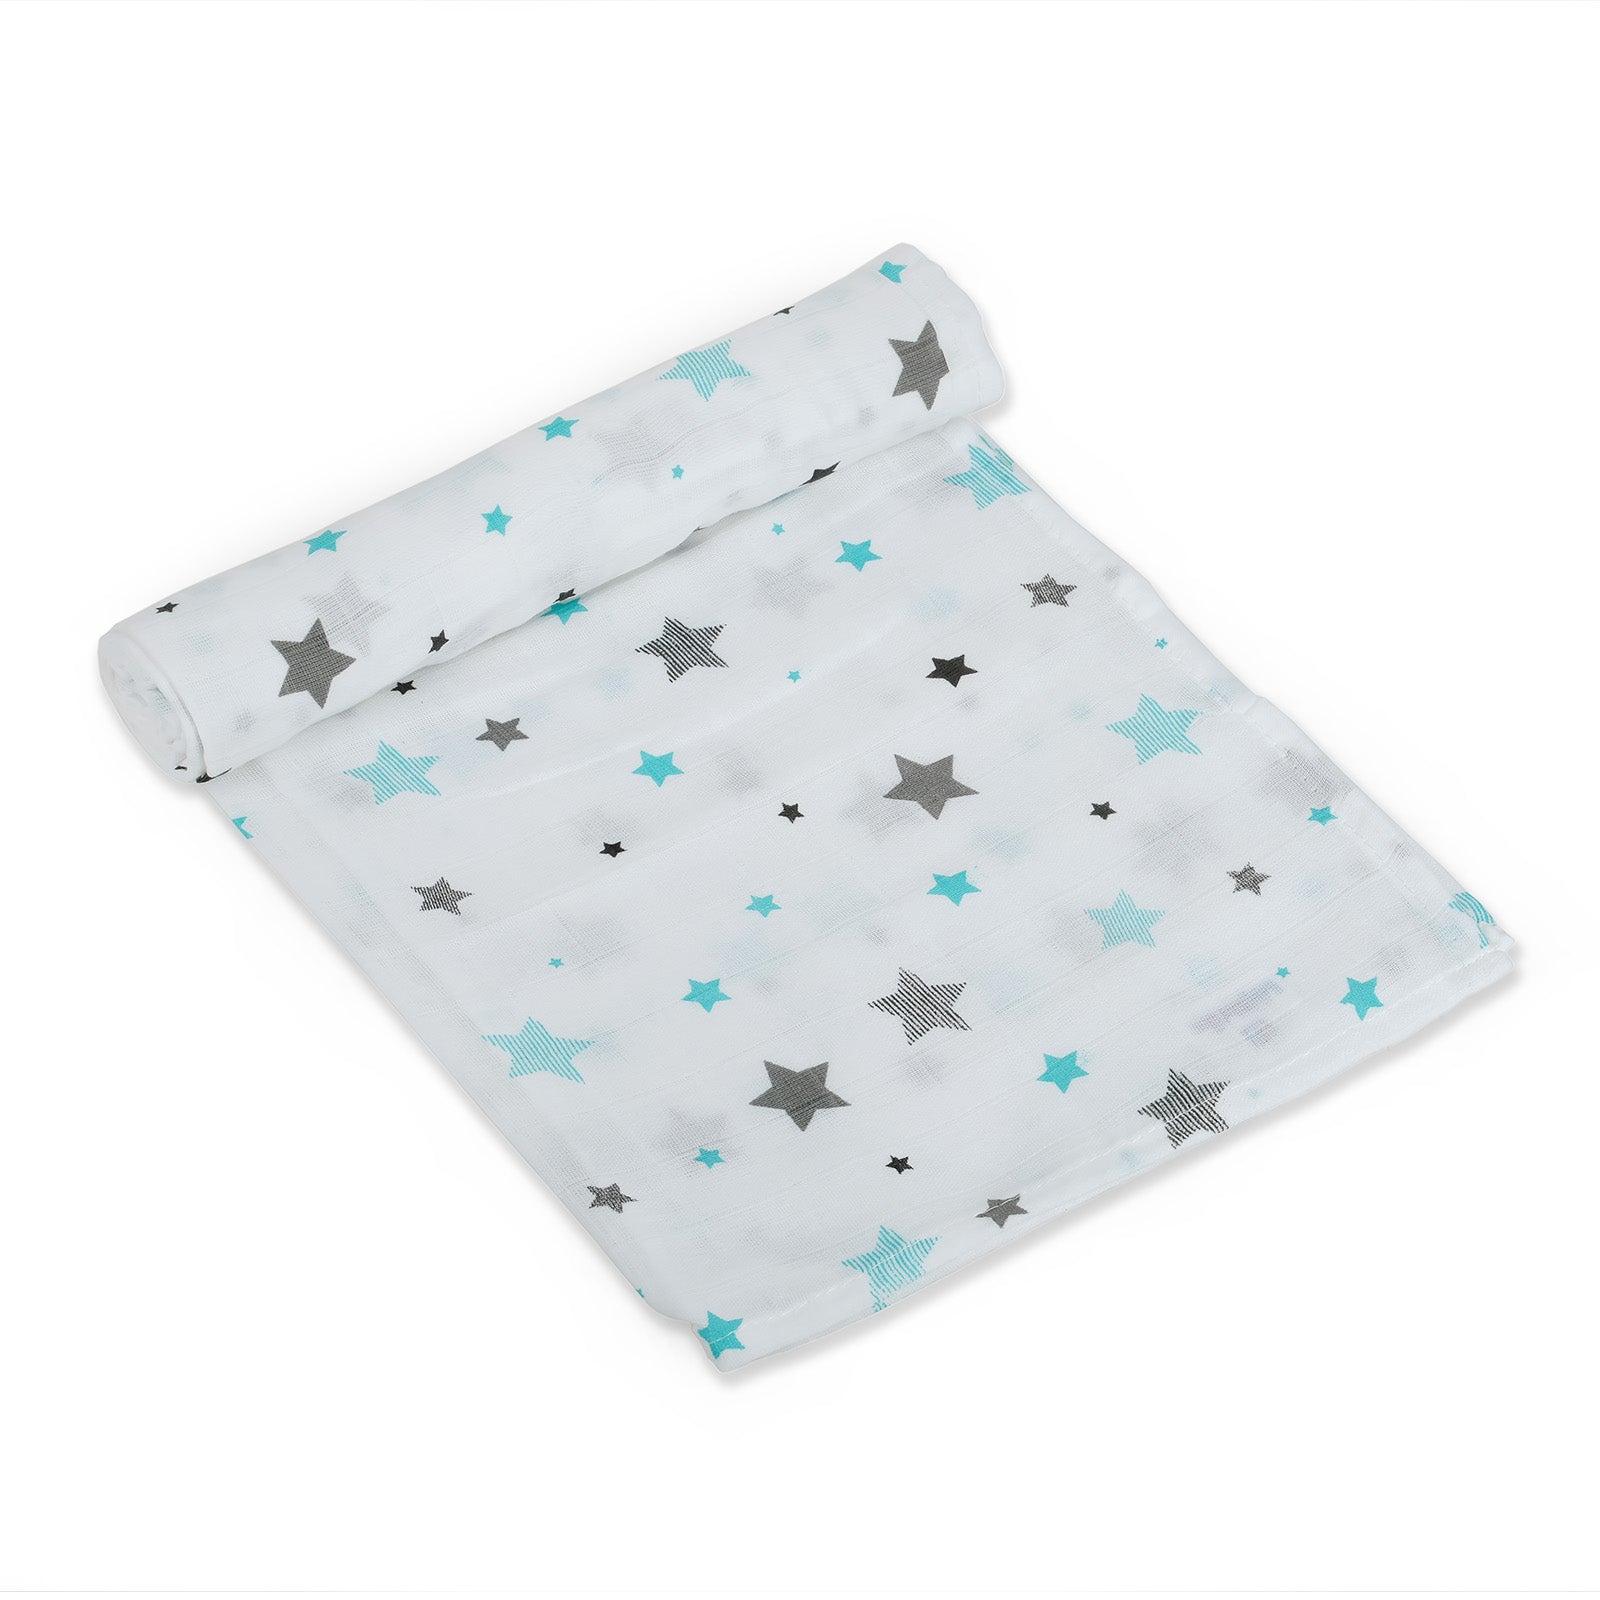 Multi-use baby blankets Swaddle sets Nursery essentials Baby sleep accessories